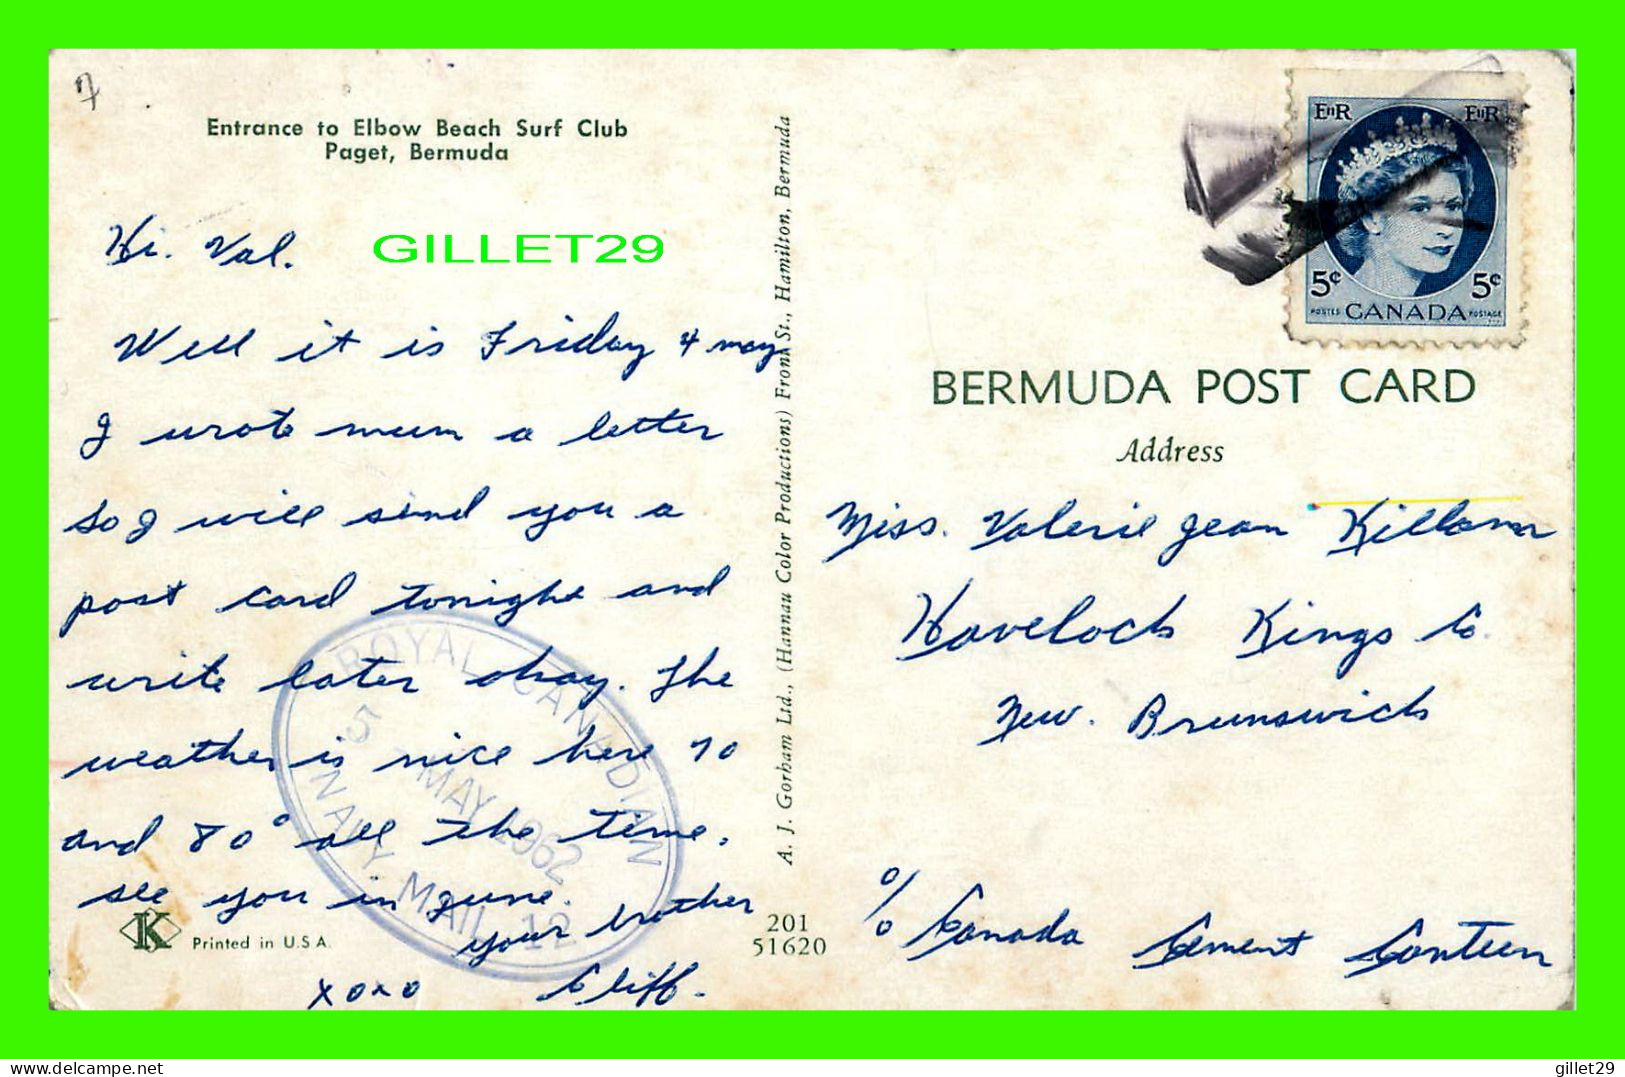 PAGET, BERMUDA - ENTRANCE TO ELBOW BEACH SURF CLUB - TRAVEL IN 1962 - OLD CAR - A. J. GORBAM LTD - - Bermuda